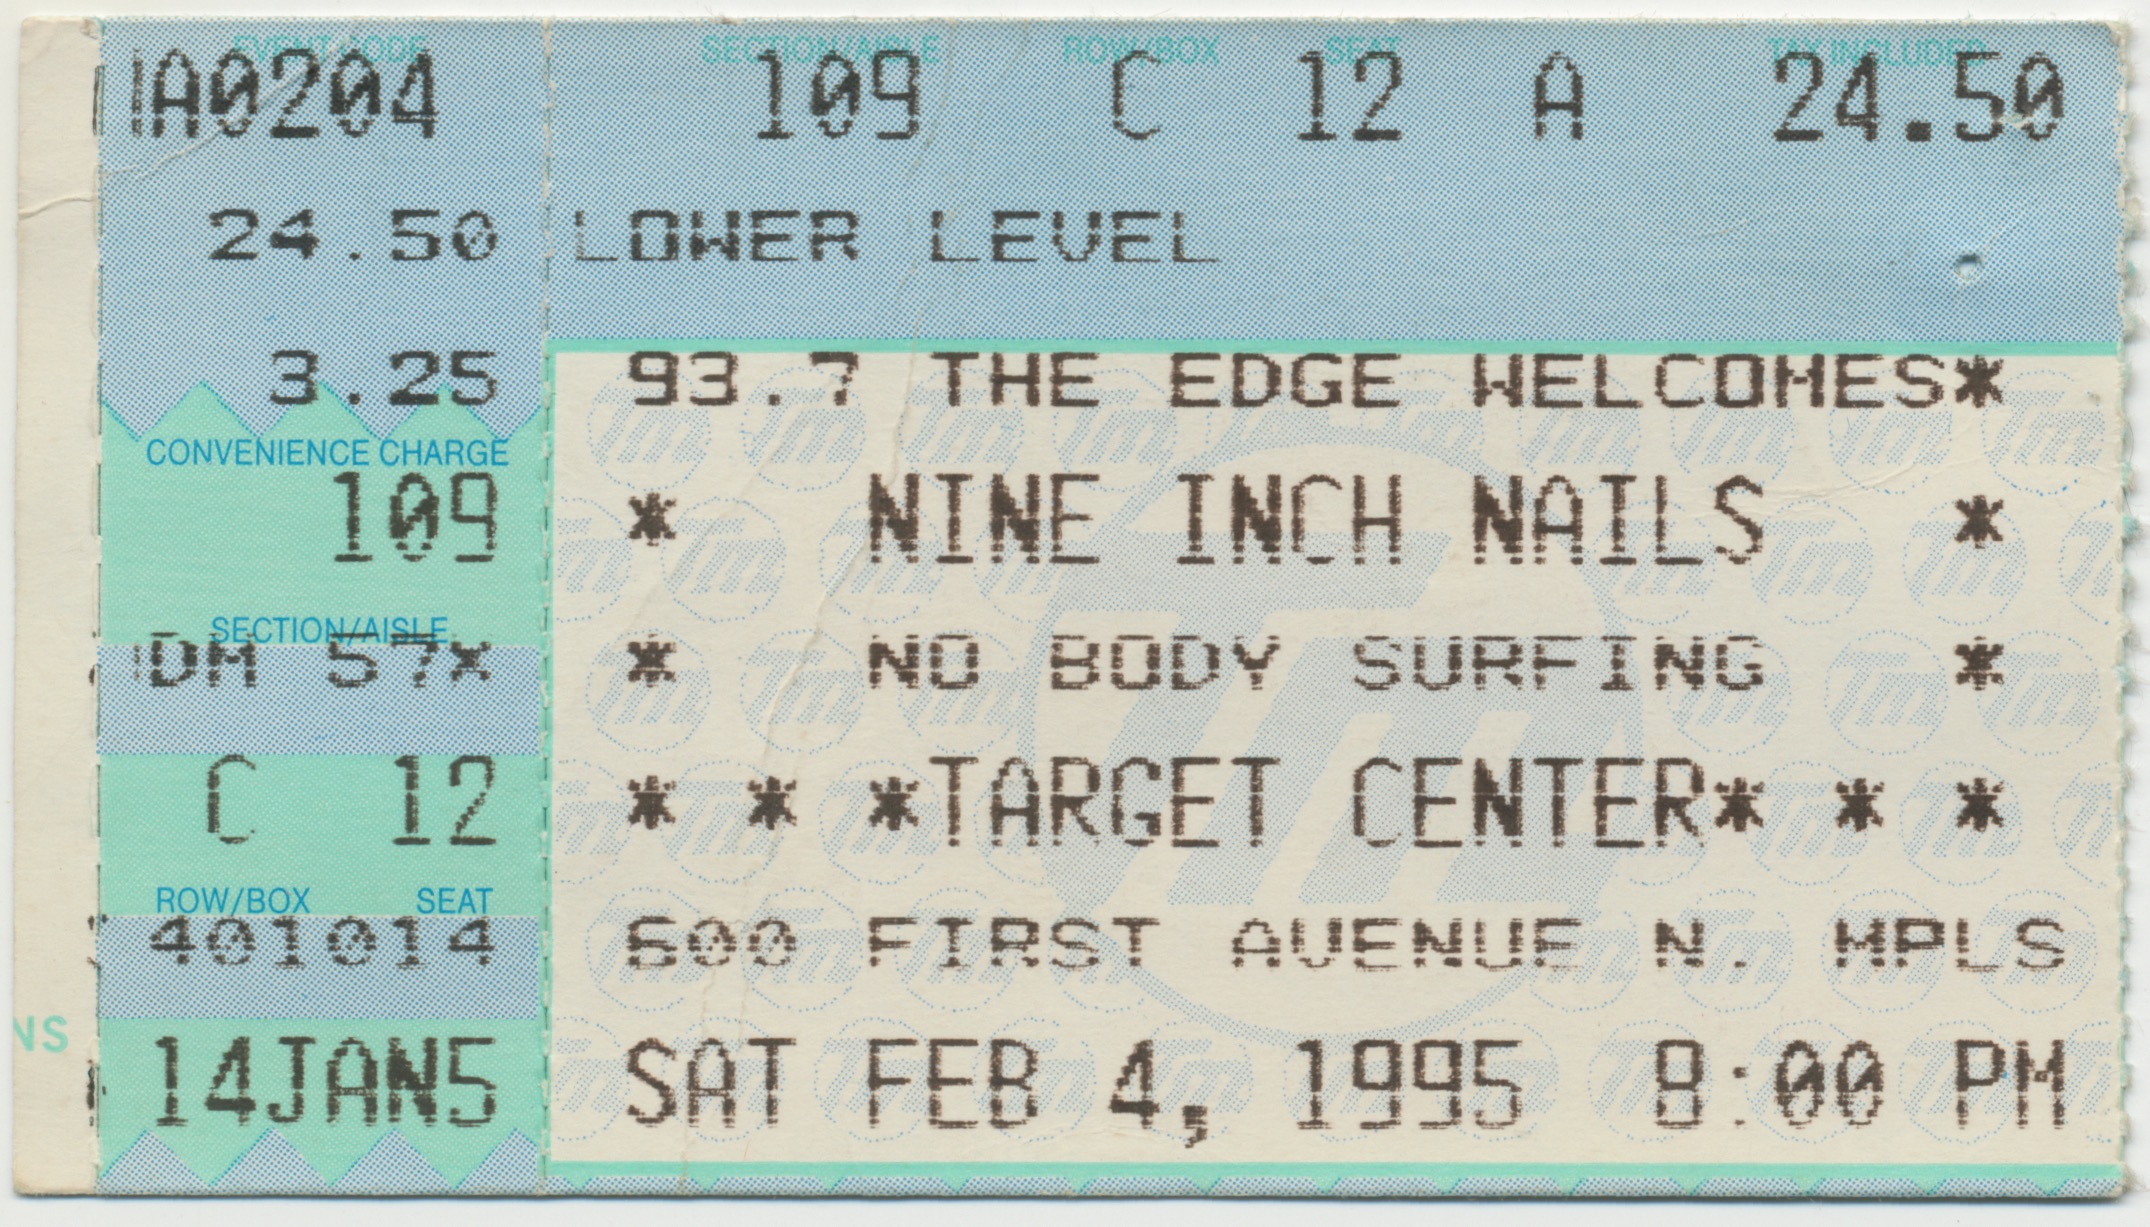 1995/02/04 Ticket